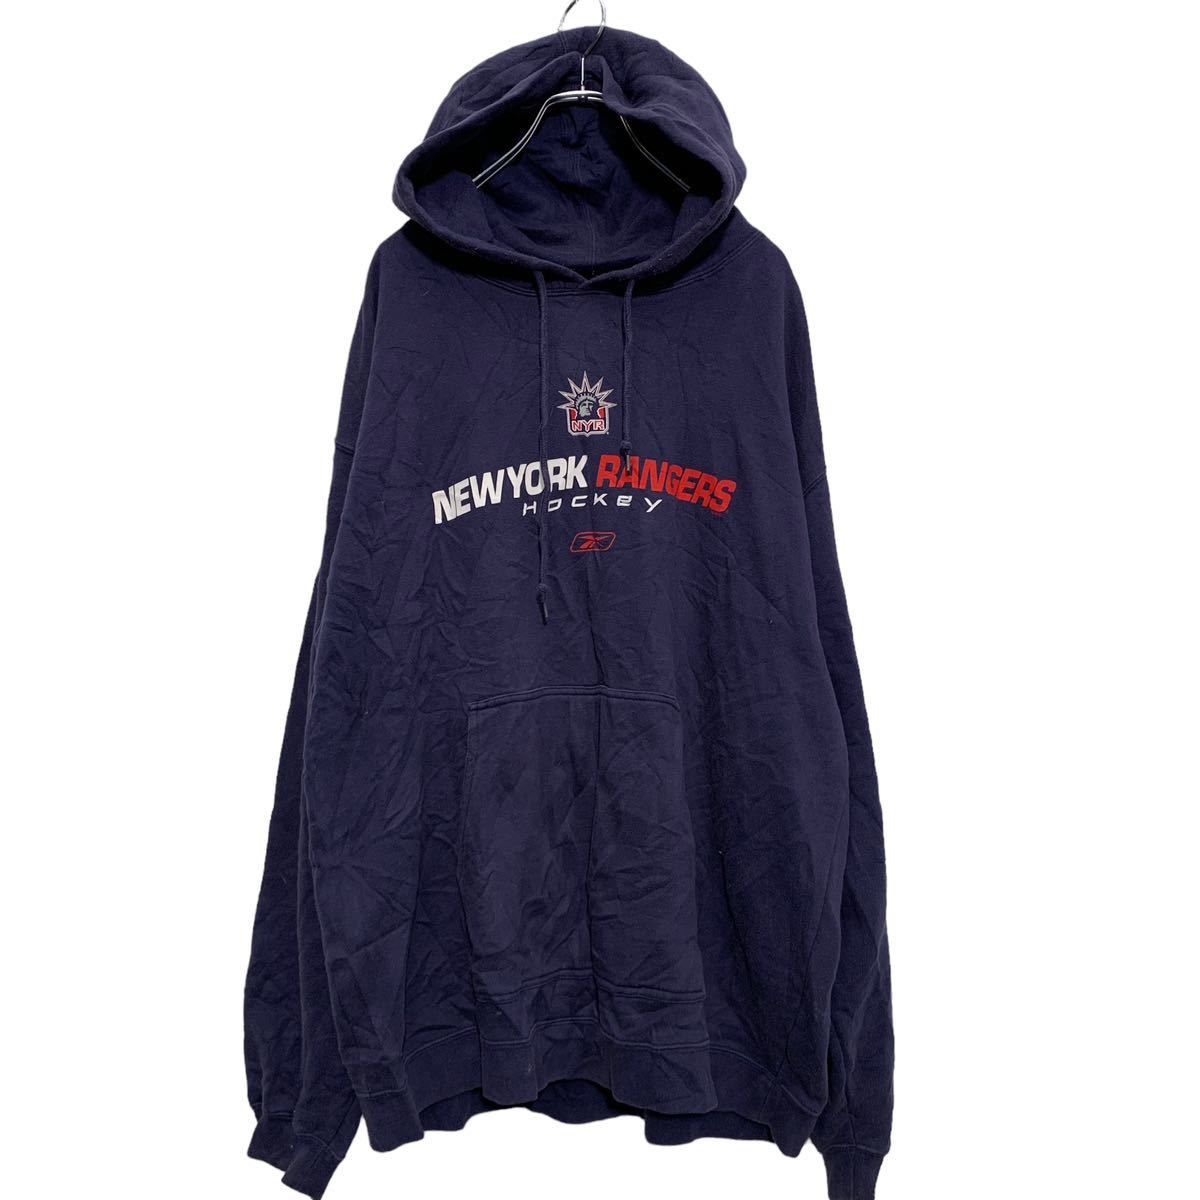 Reebok Printed Sweatshirt Hoodie XL Navy Reebok Lined NYR Pullover Pockets  Vintage Clothing Wholesale American Purchase a602-5152 - Remambo u0026 Mercari